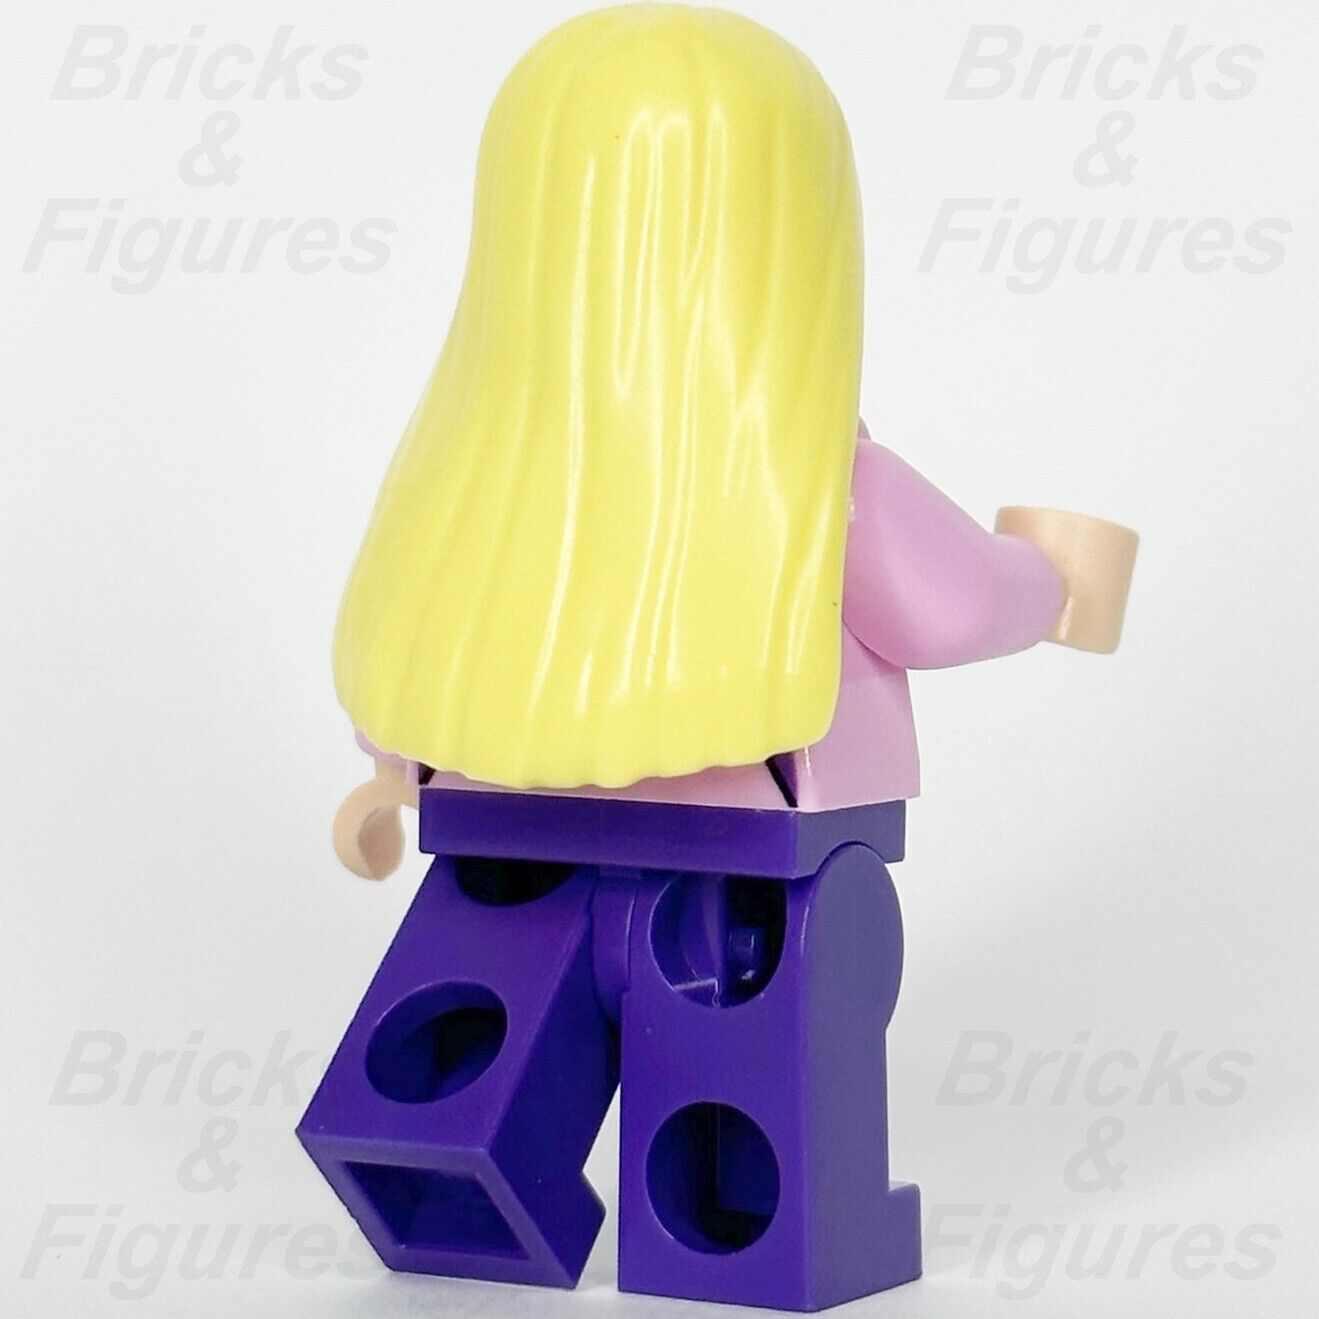 LEGO Creator Phoebe Buffay Minifigure F·R·I·E·N·D·S Friends TV Series 10292 3